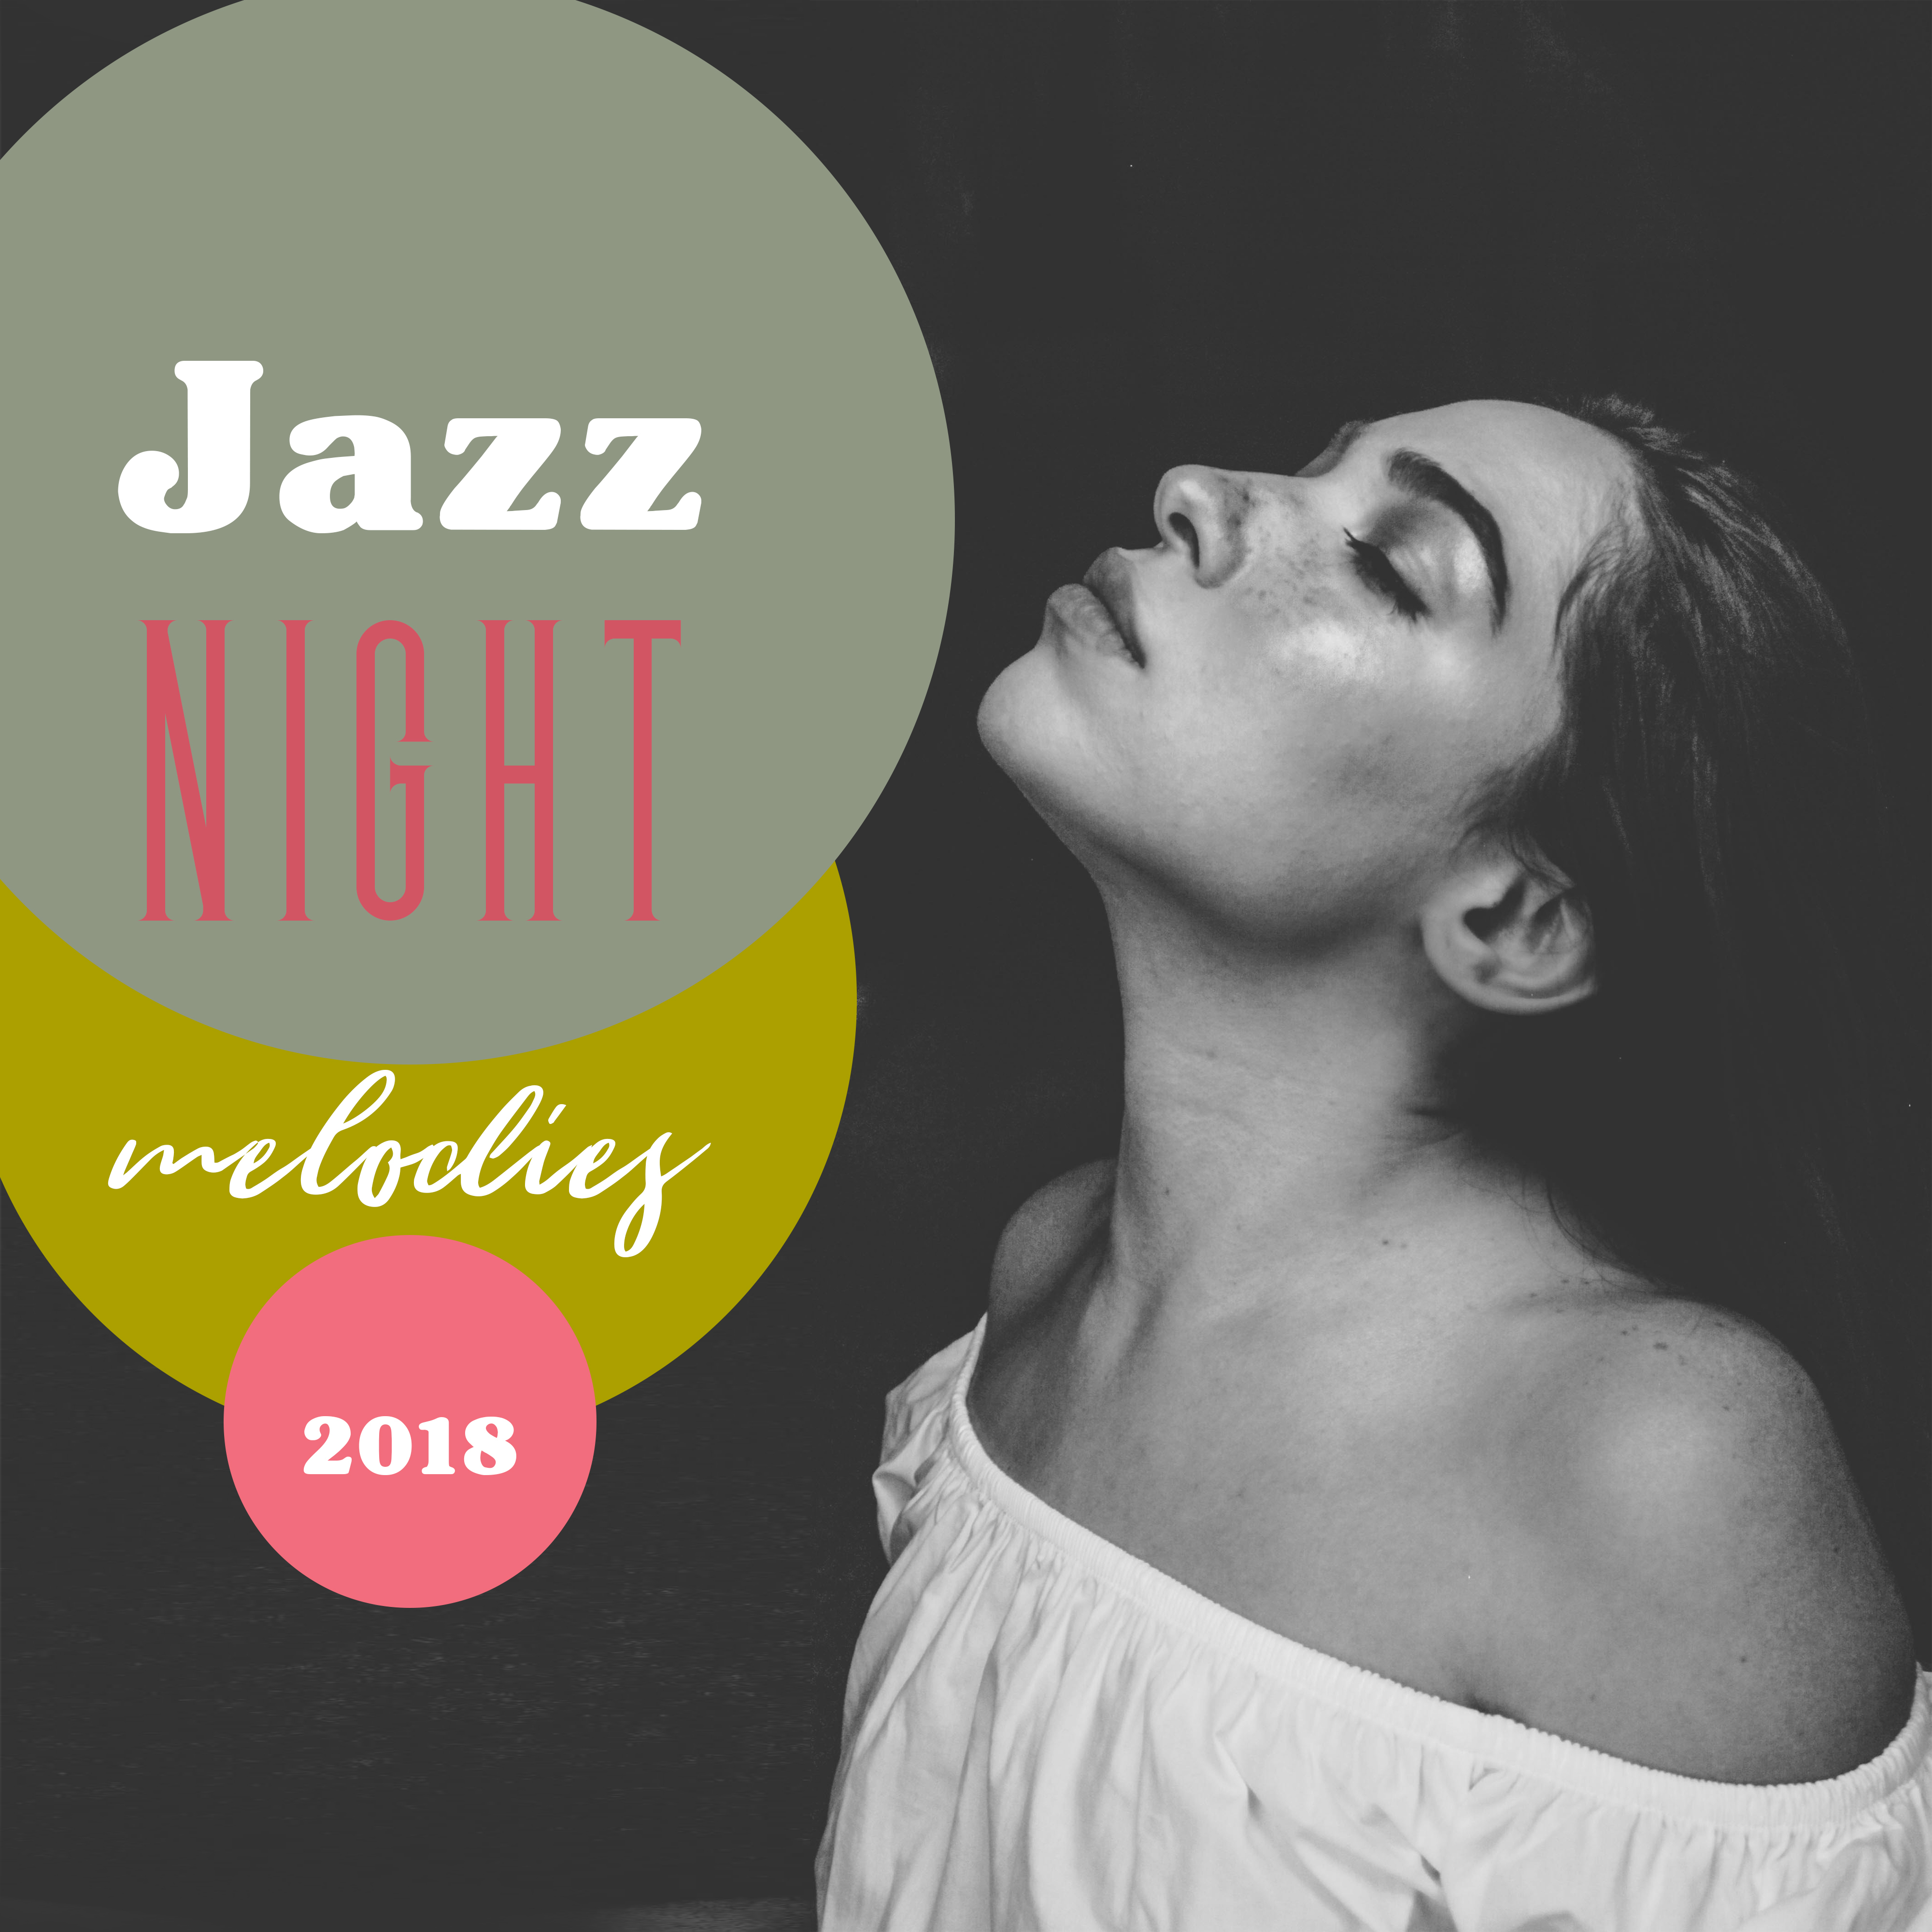 Jazz Night Melodies 2018